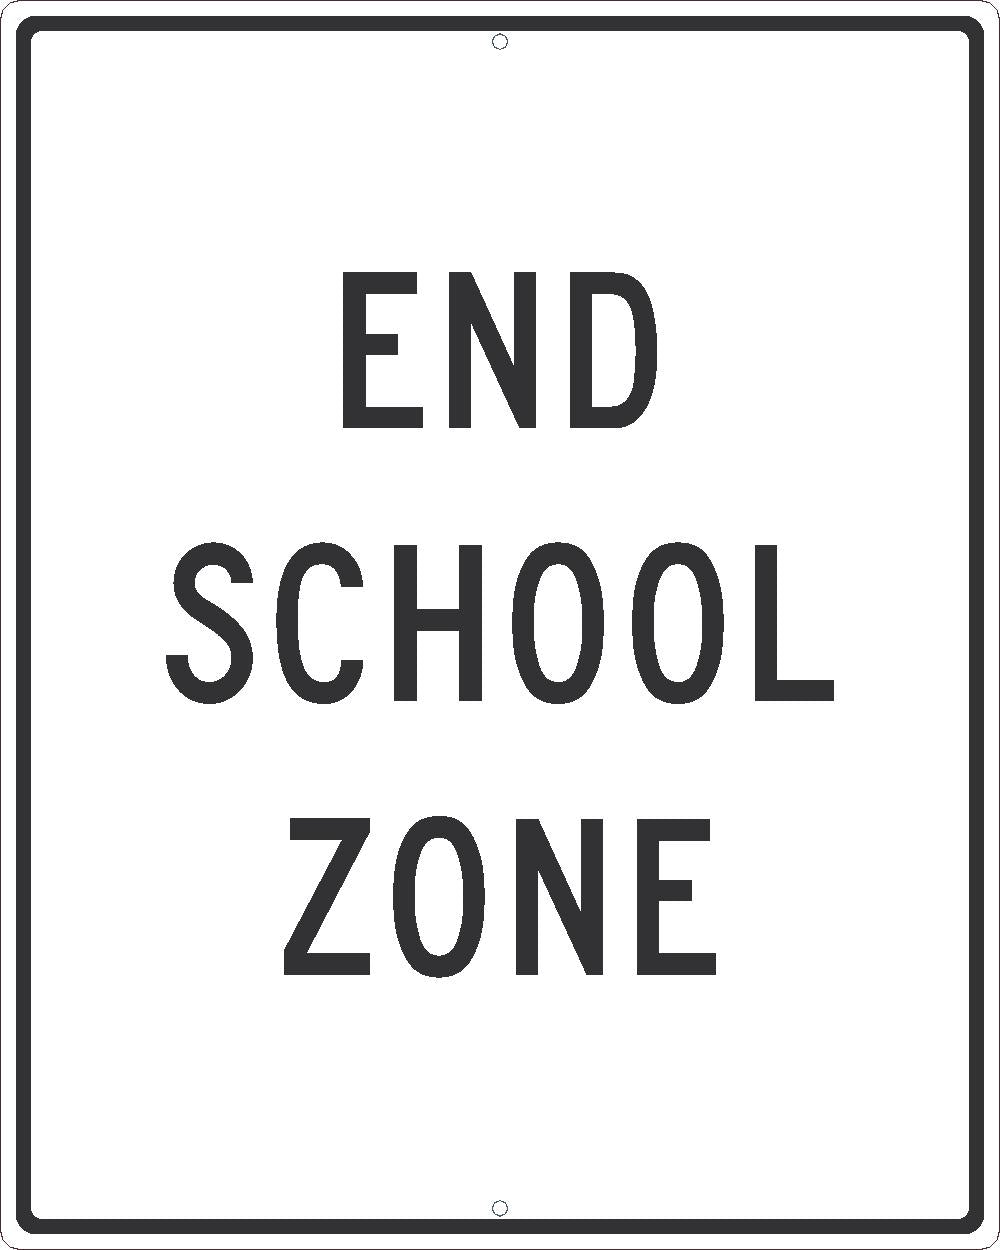 END SCHOOL ZONE SIGN, 30x24, .080 HIP REF ALUM